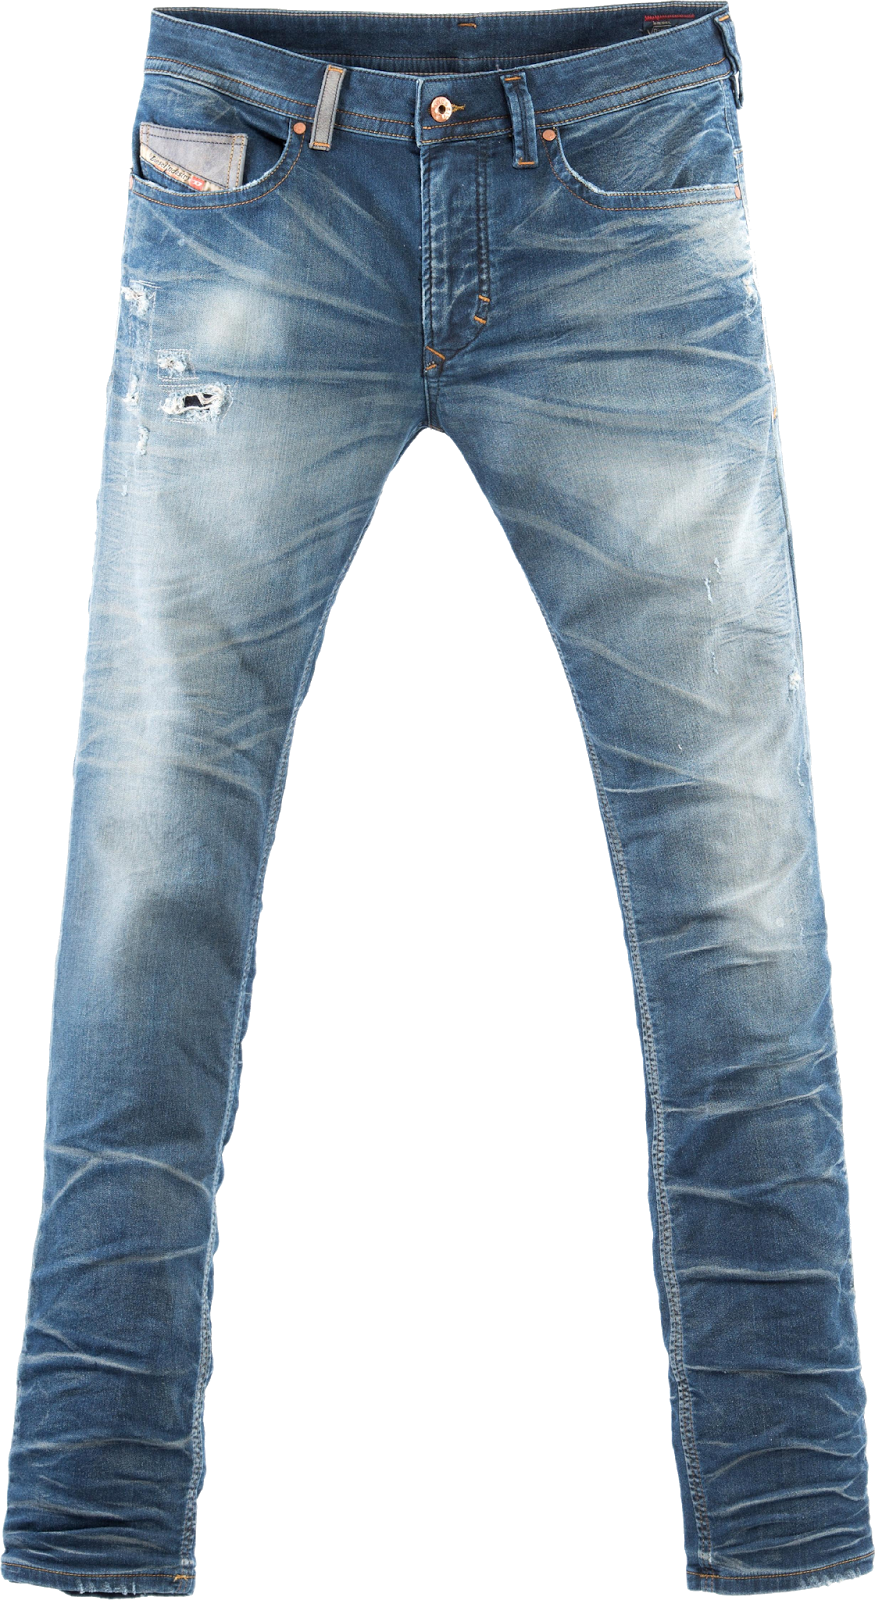 Menu0027s jeans, Product Kind